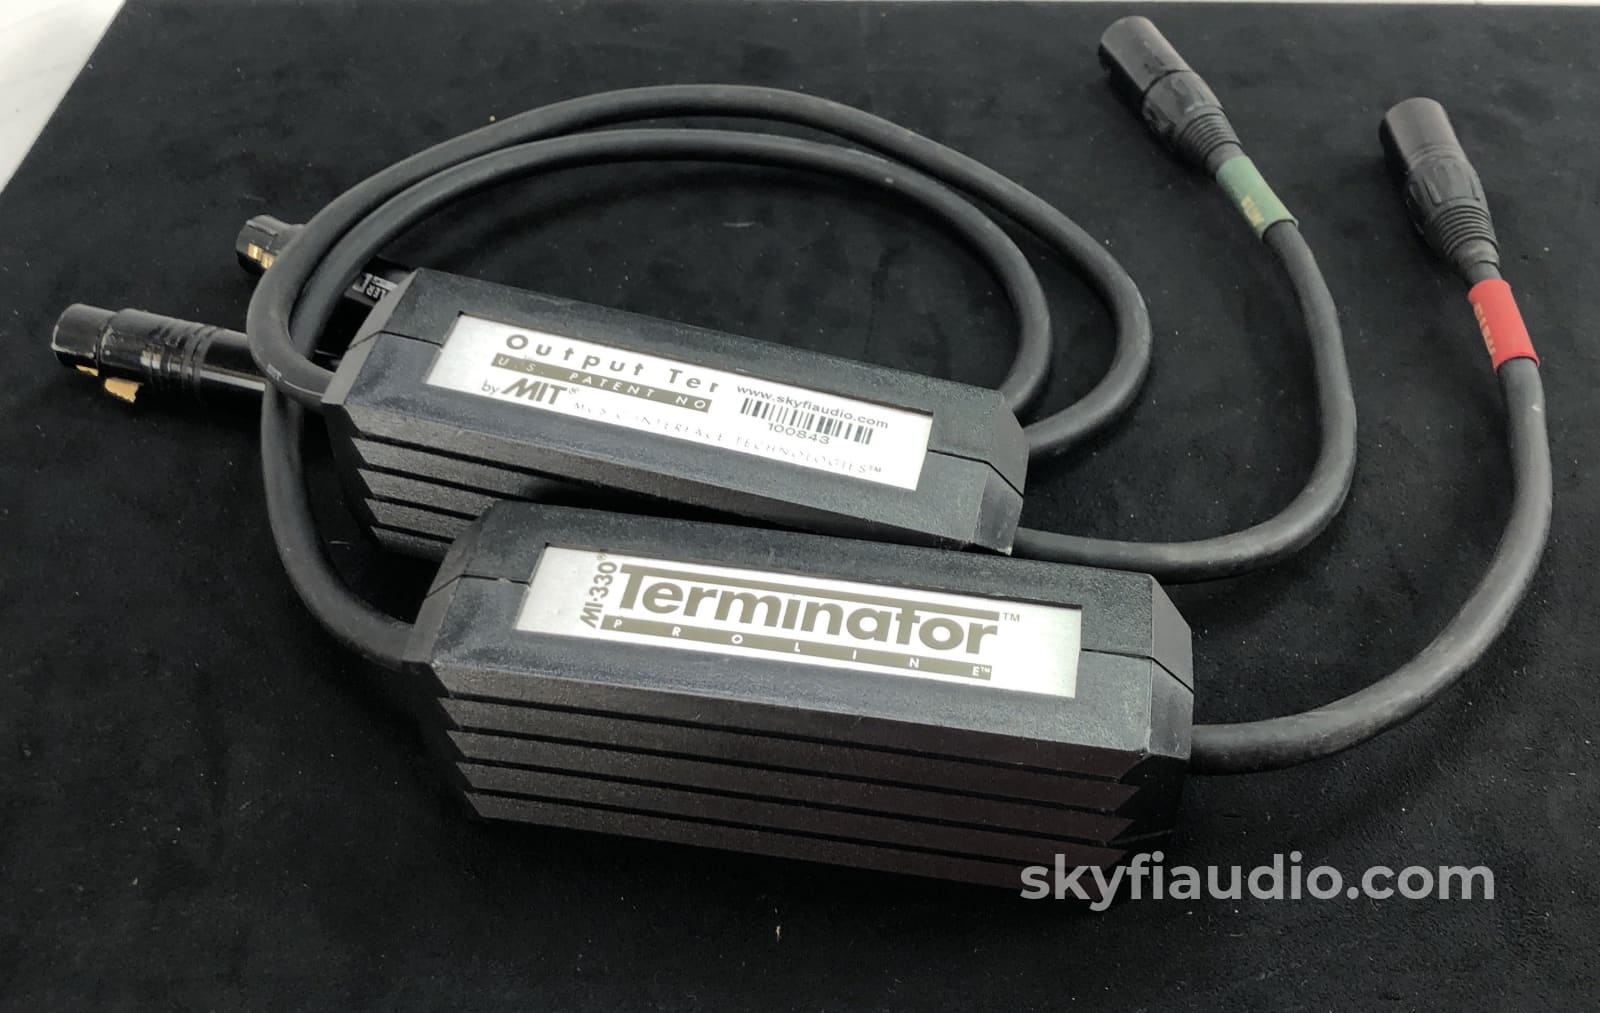 Mit Mi-330 Terminator Xlr Cable - 1M Cables